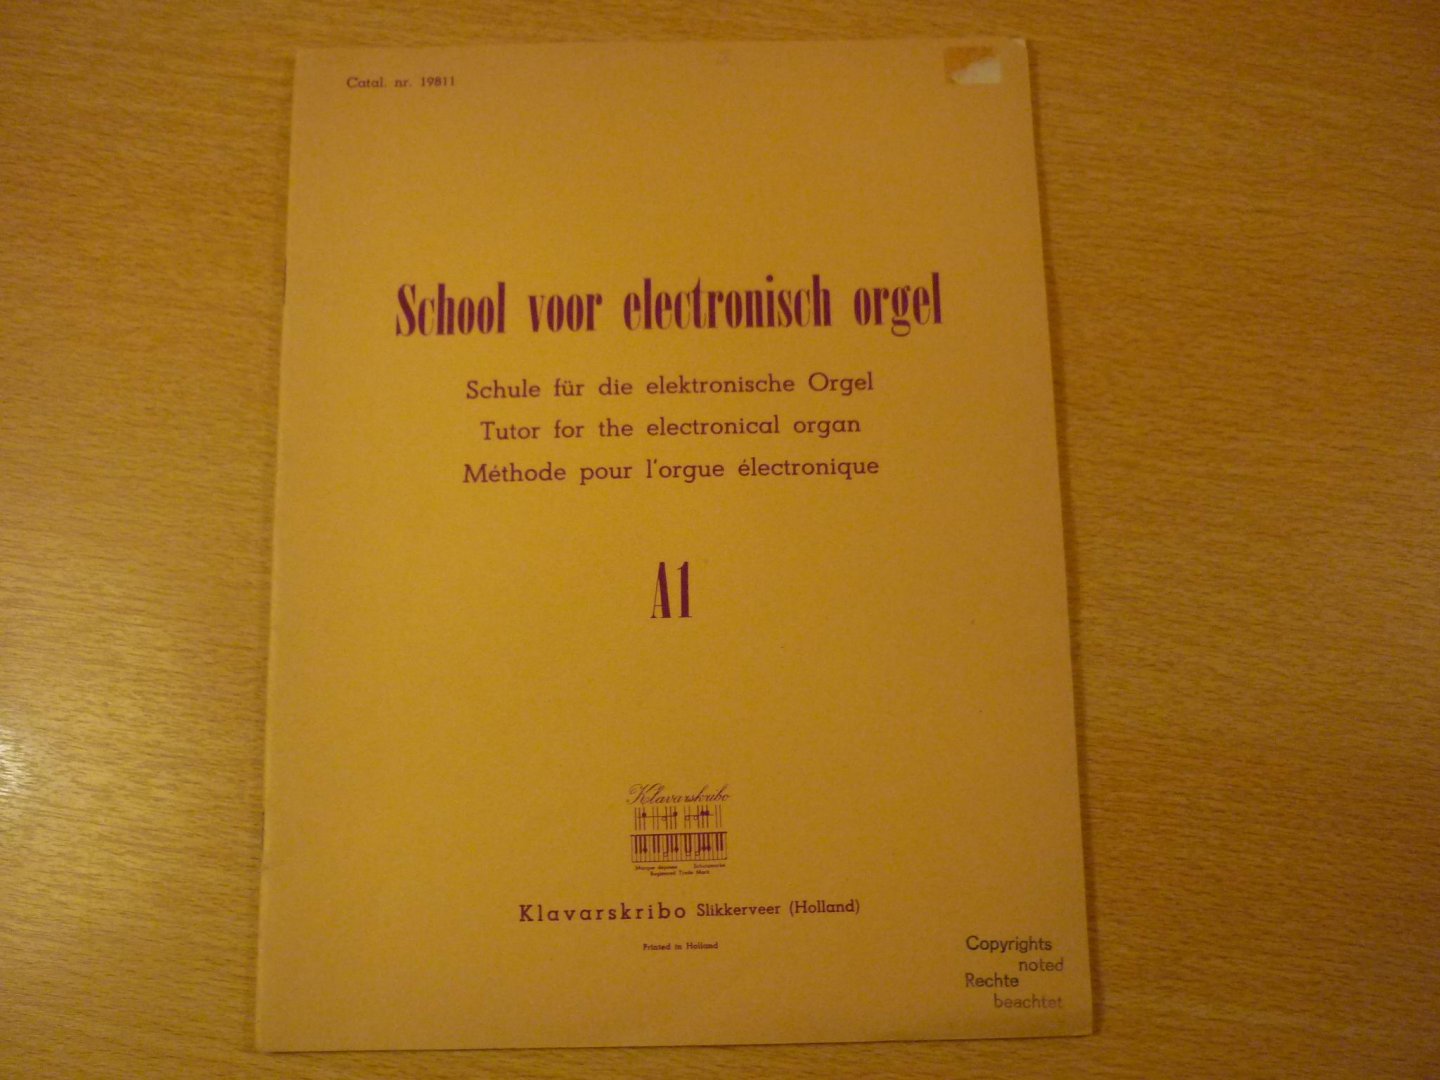 Div. - School voor electronisch orgel - A1  /  Klavarskribo